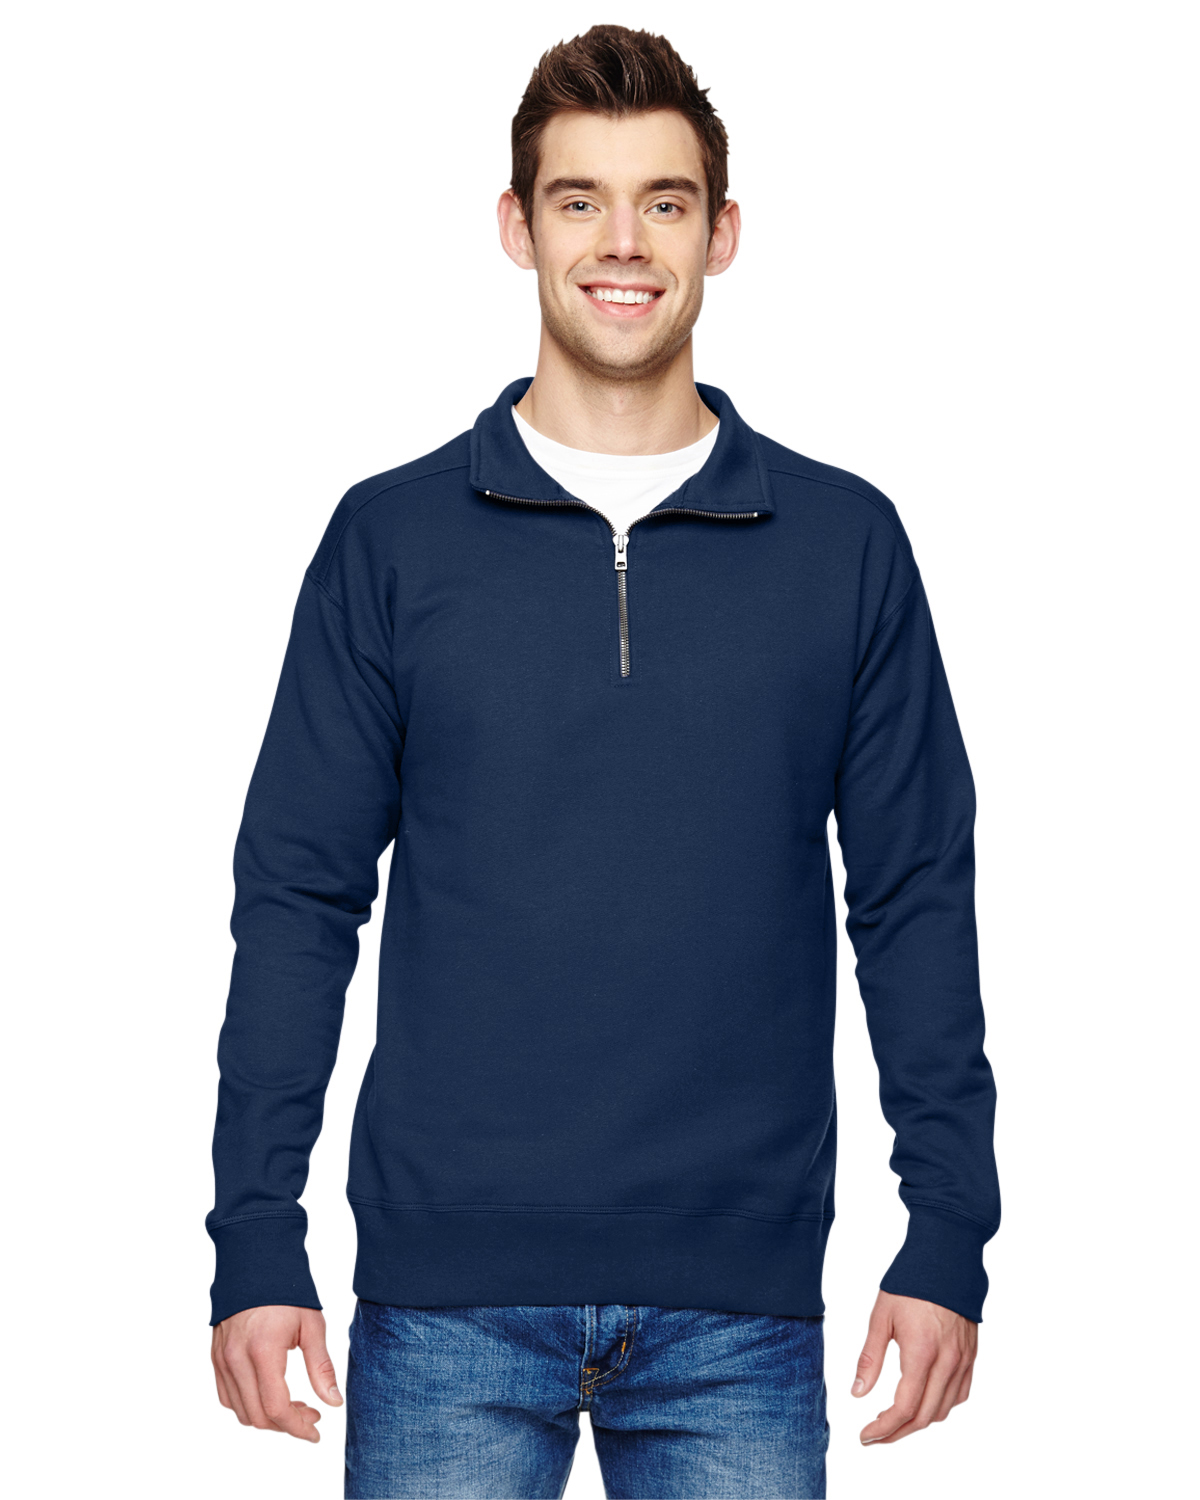 Men's Nano Premium Soft Lightweight Fleece Jacket - image 1 of 2